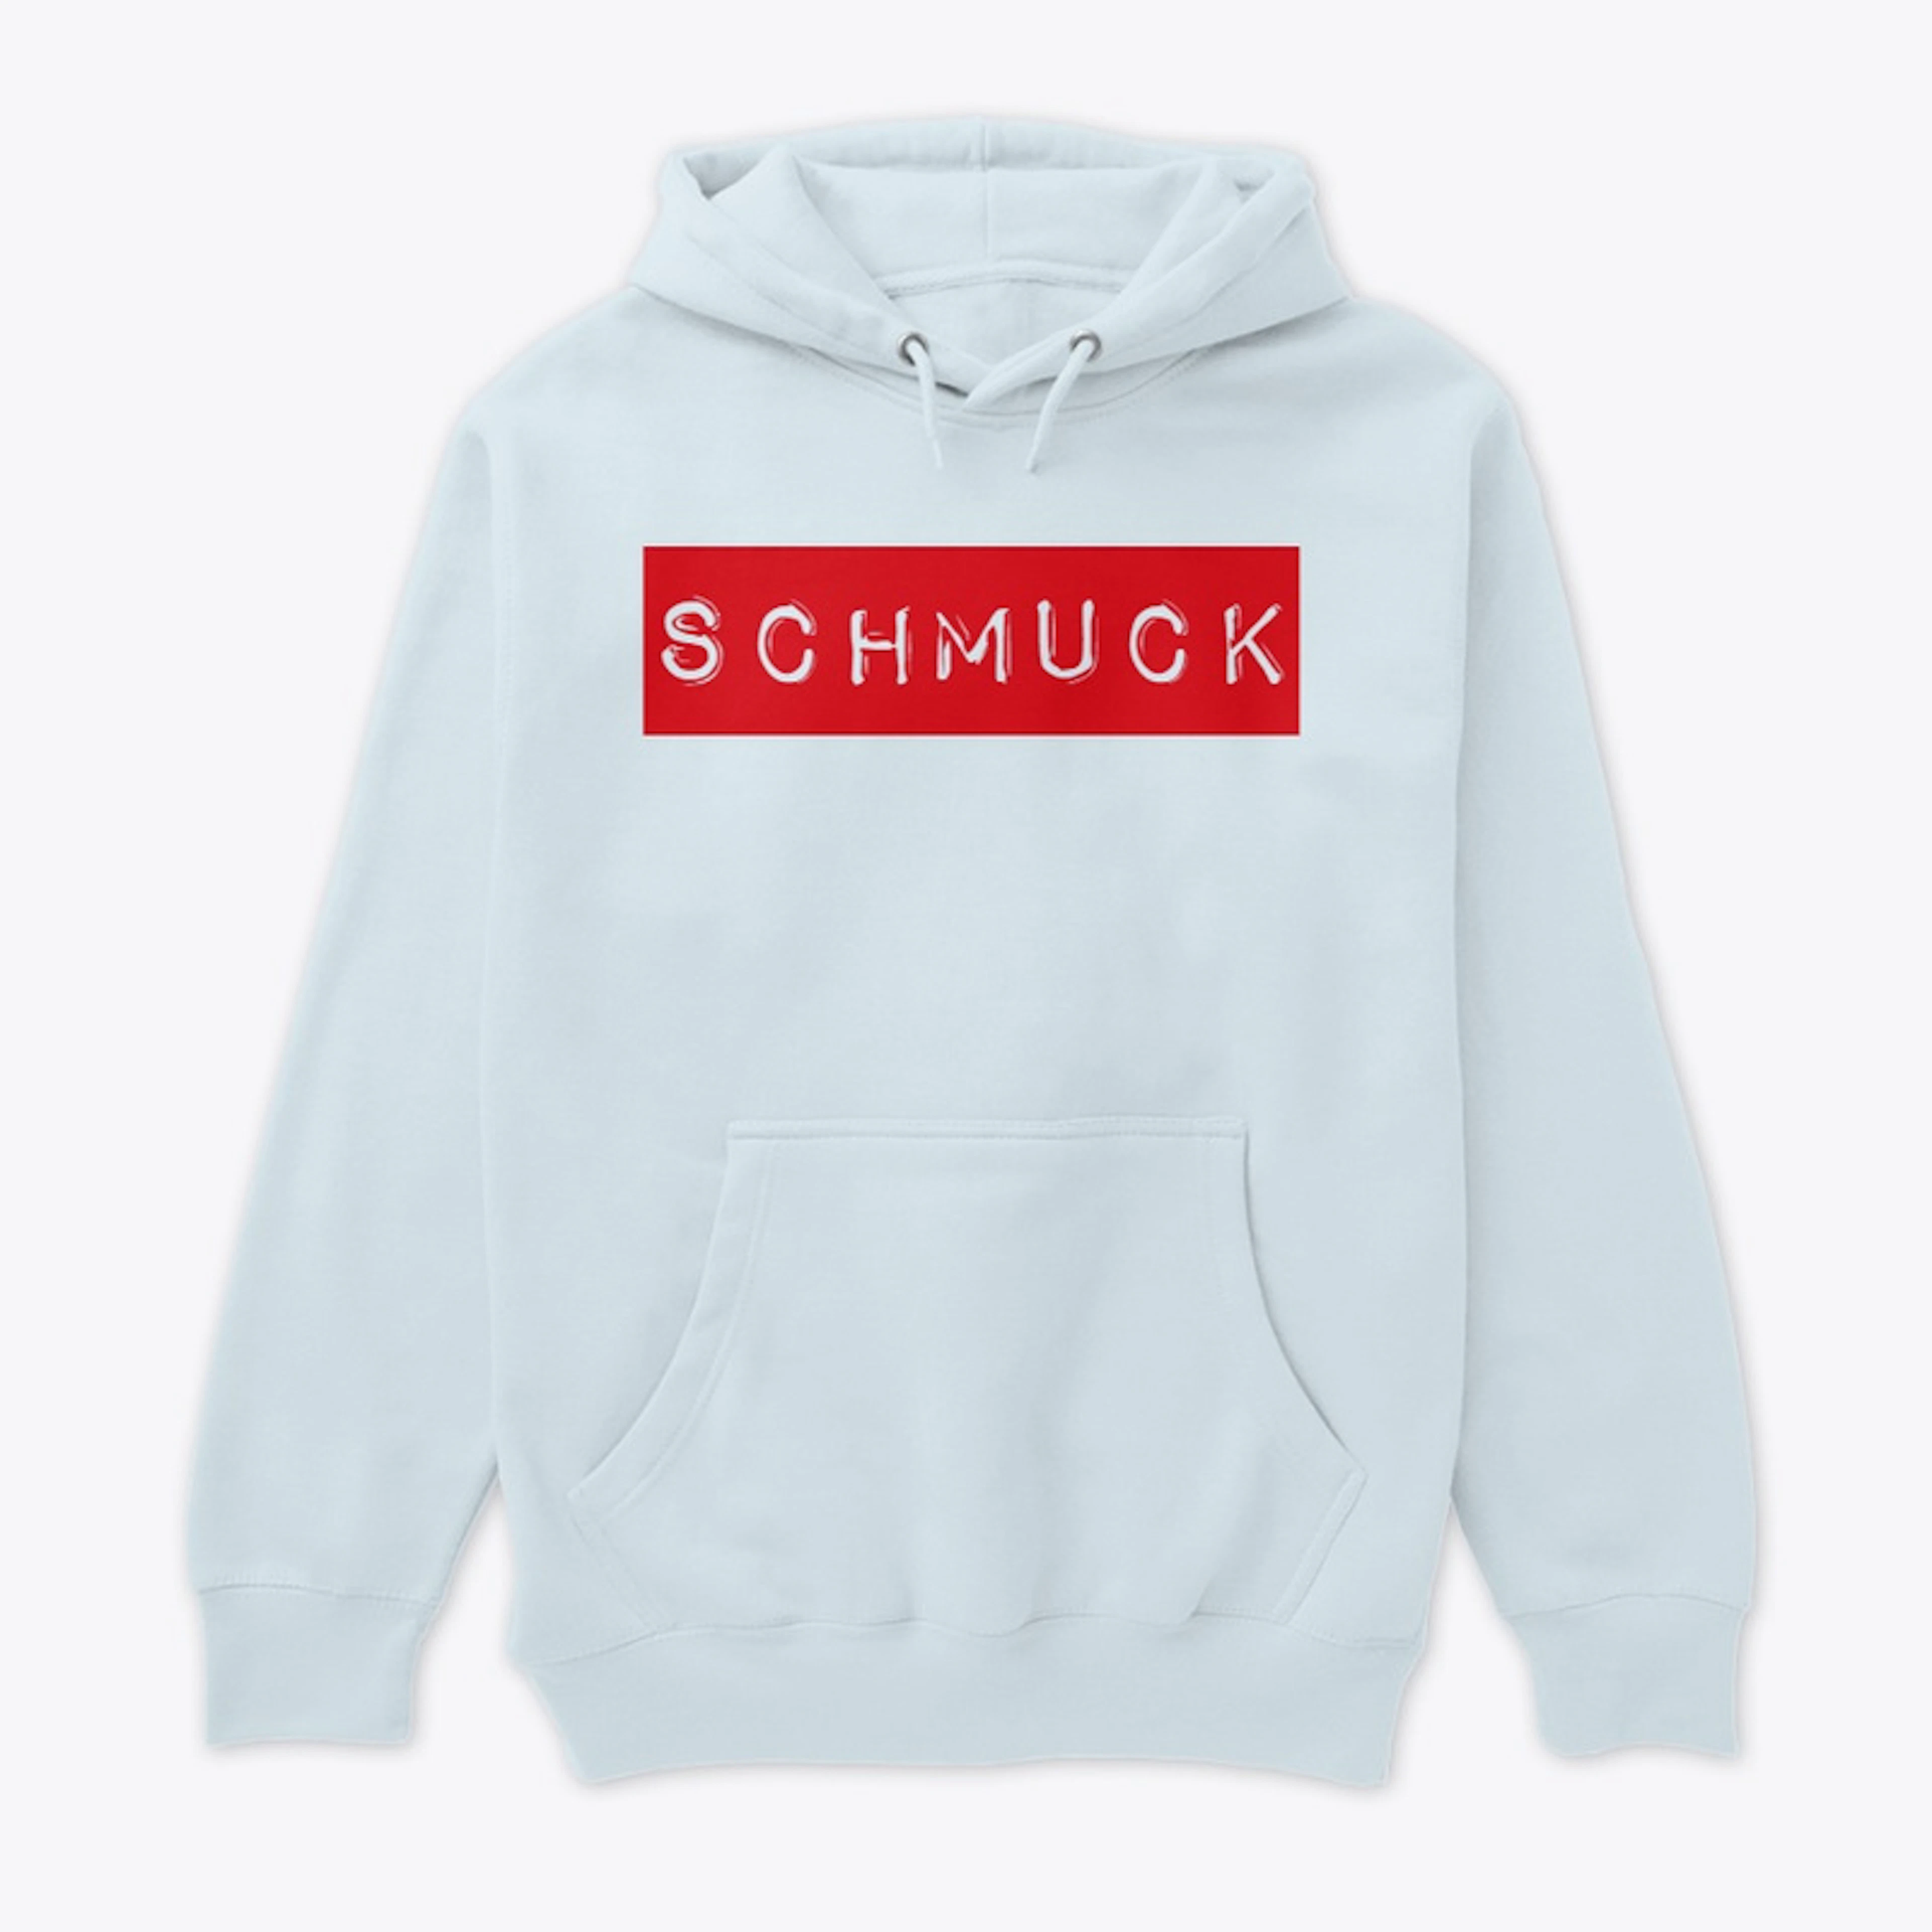 Schmuck   